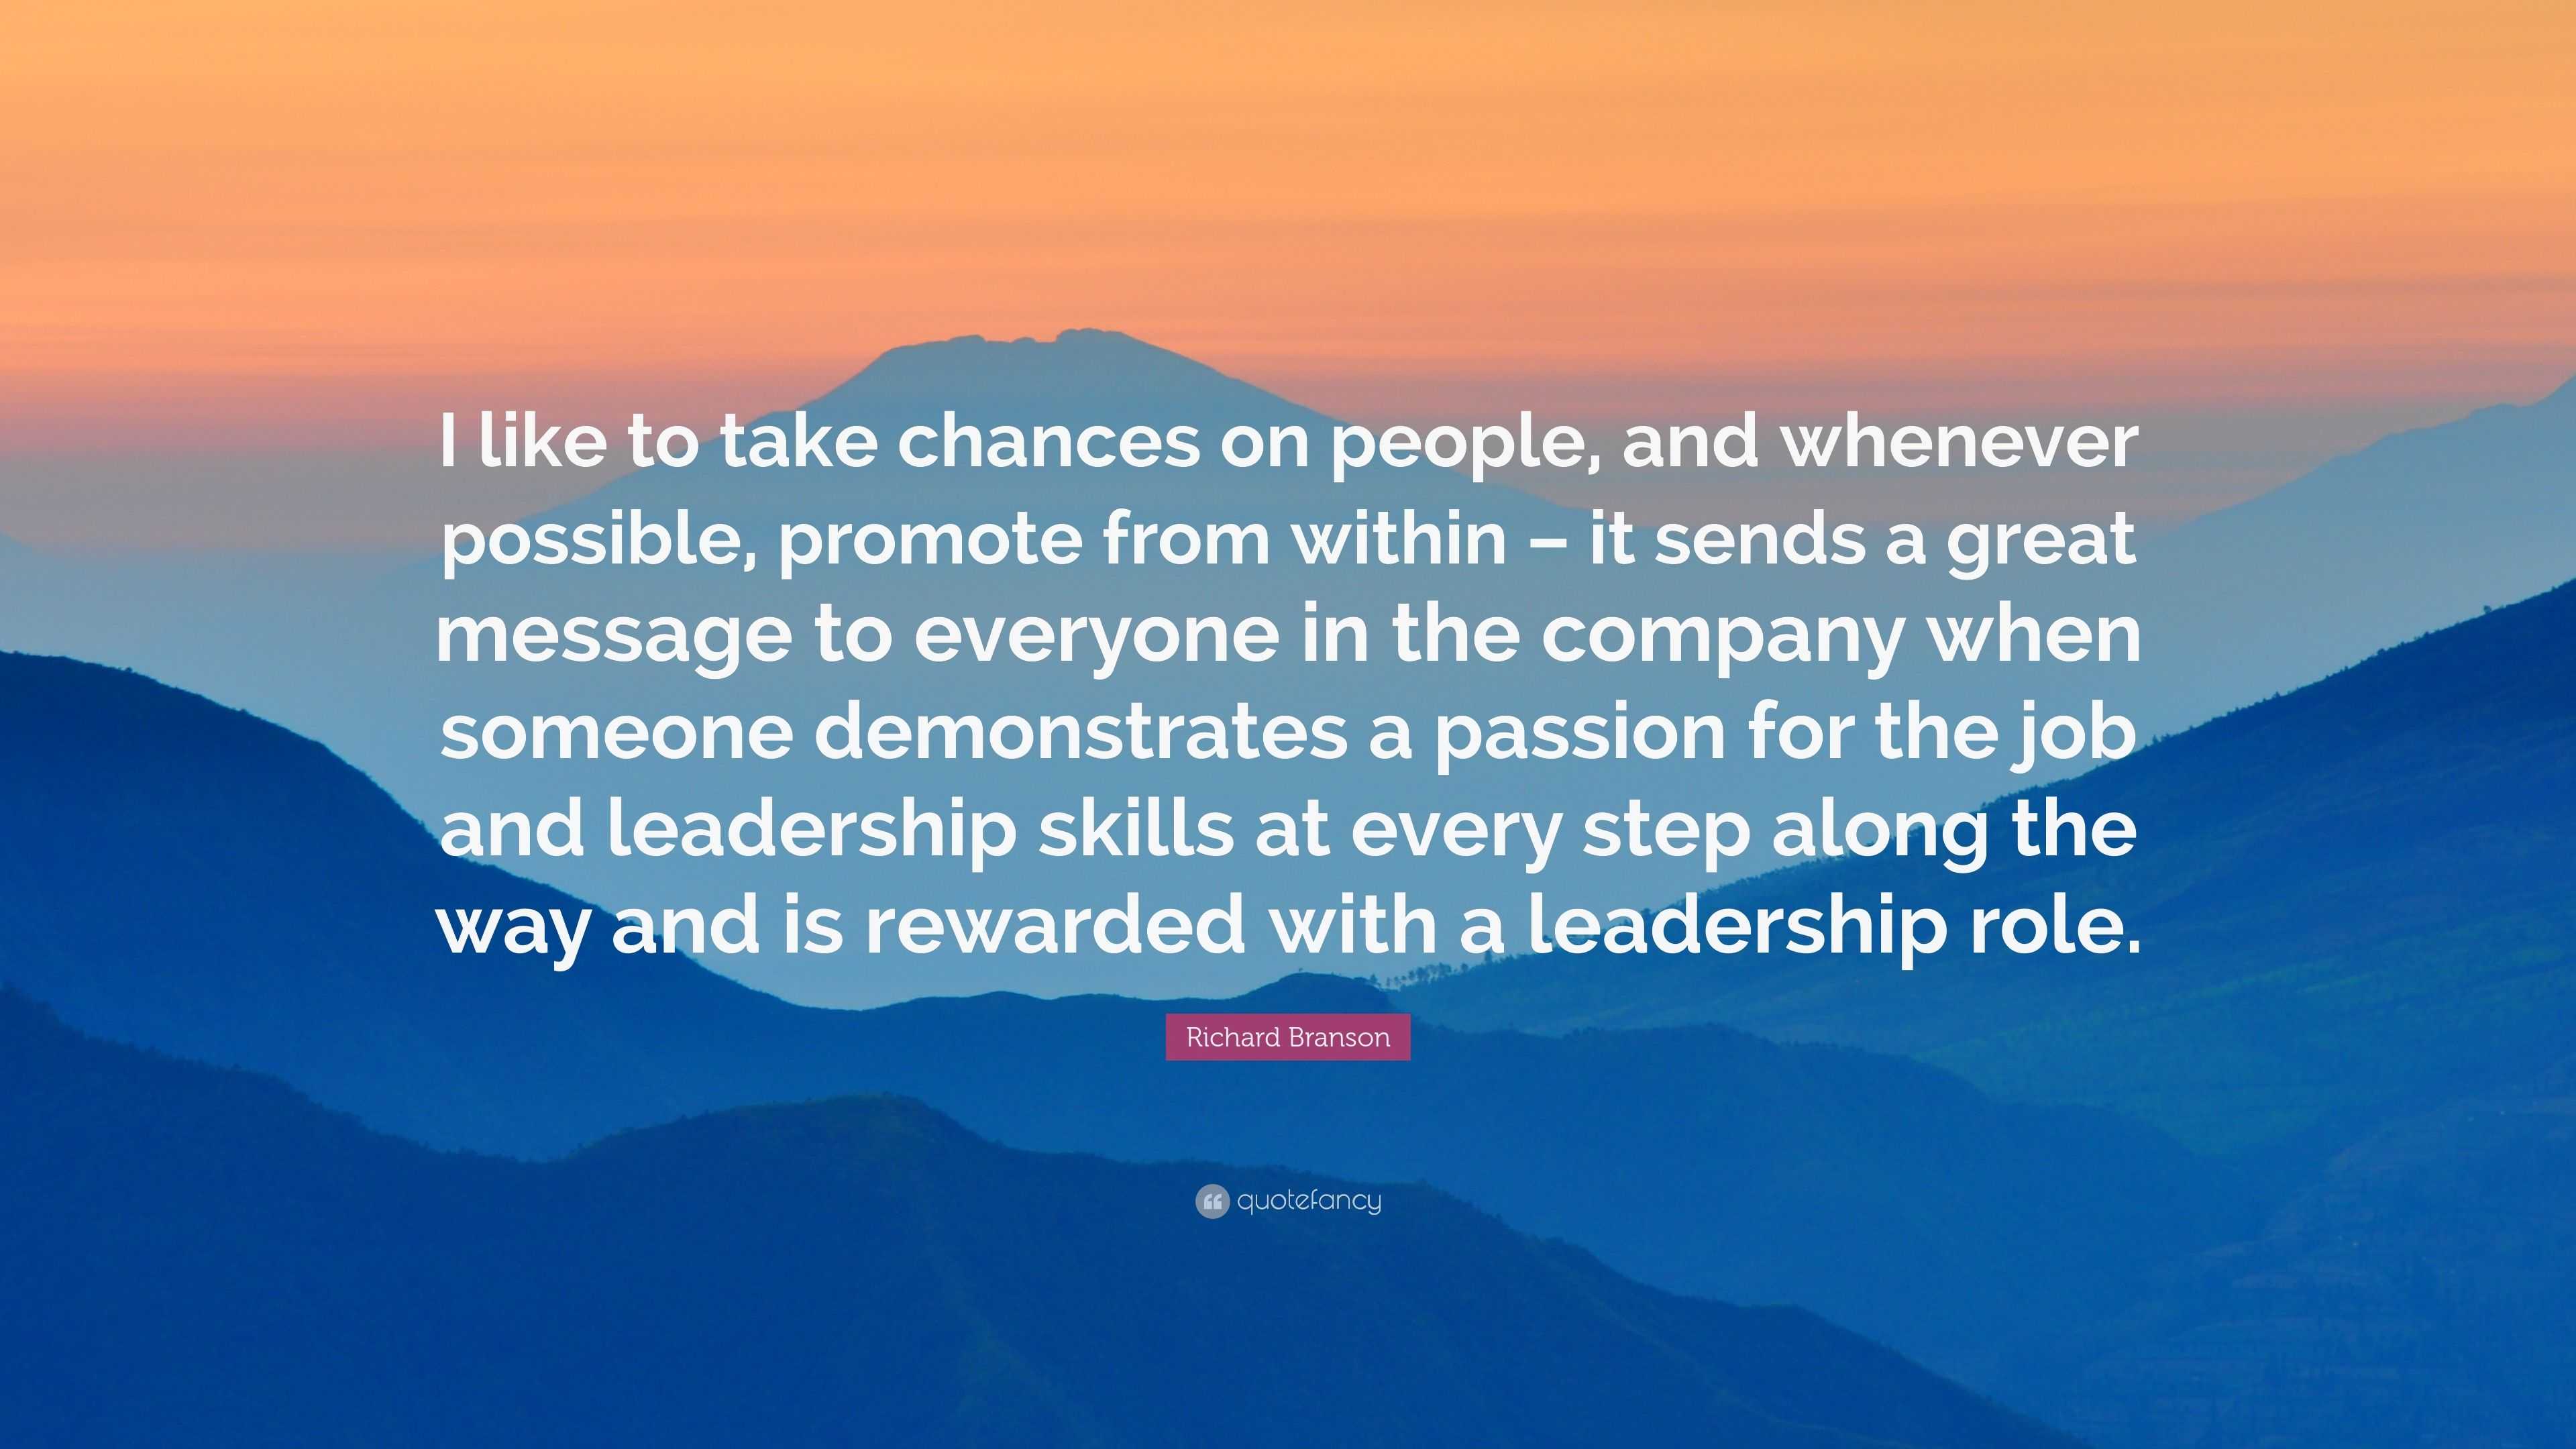 richard branson quotes on leadership